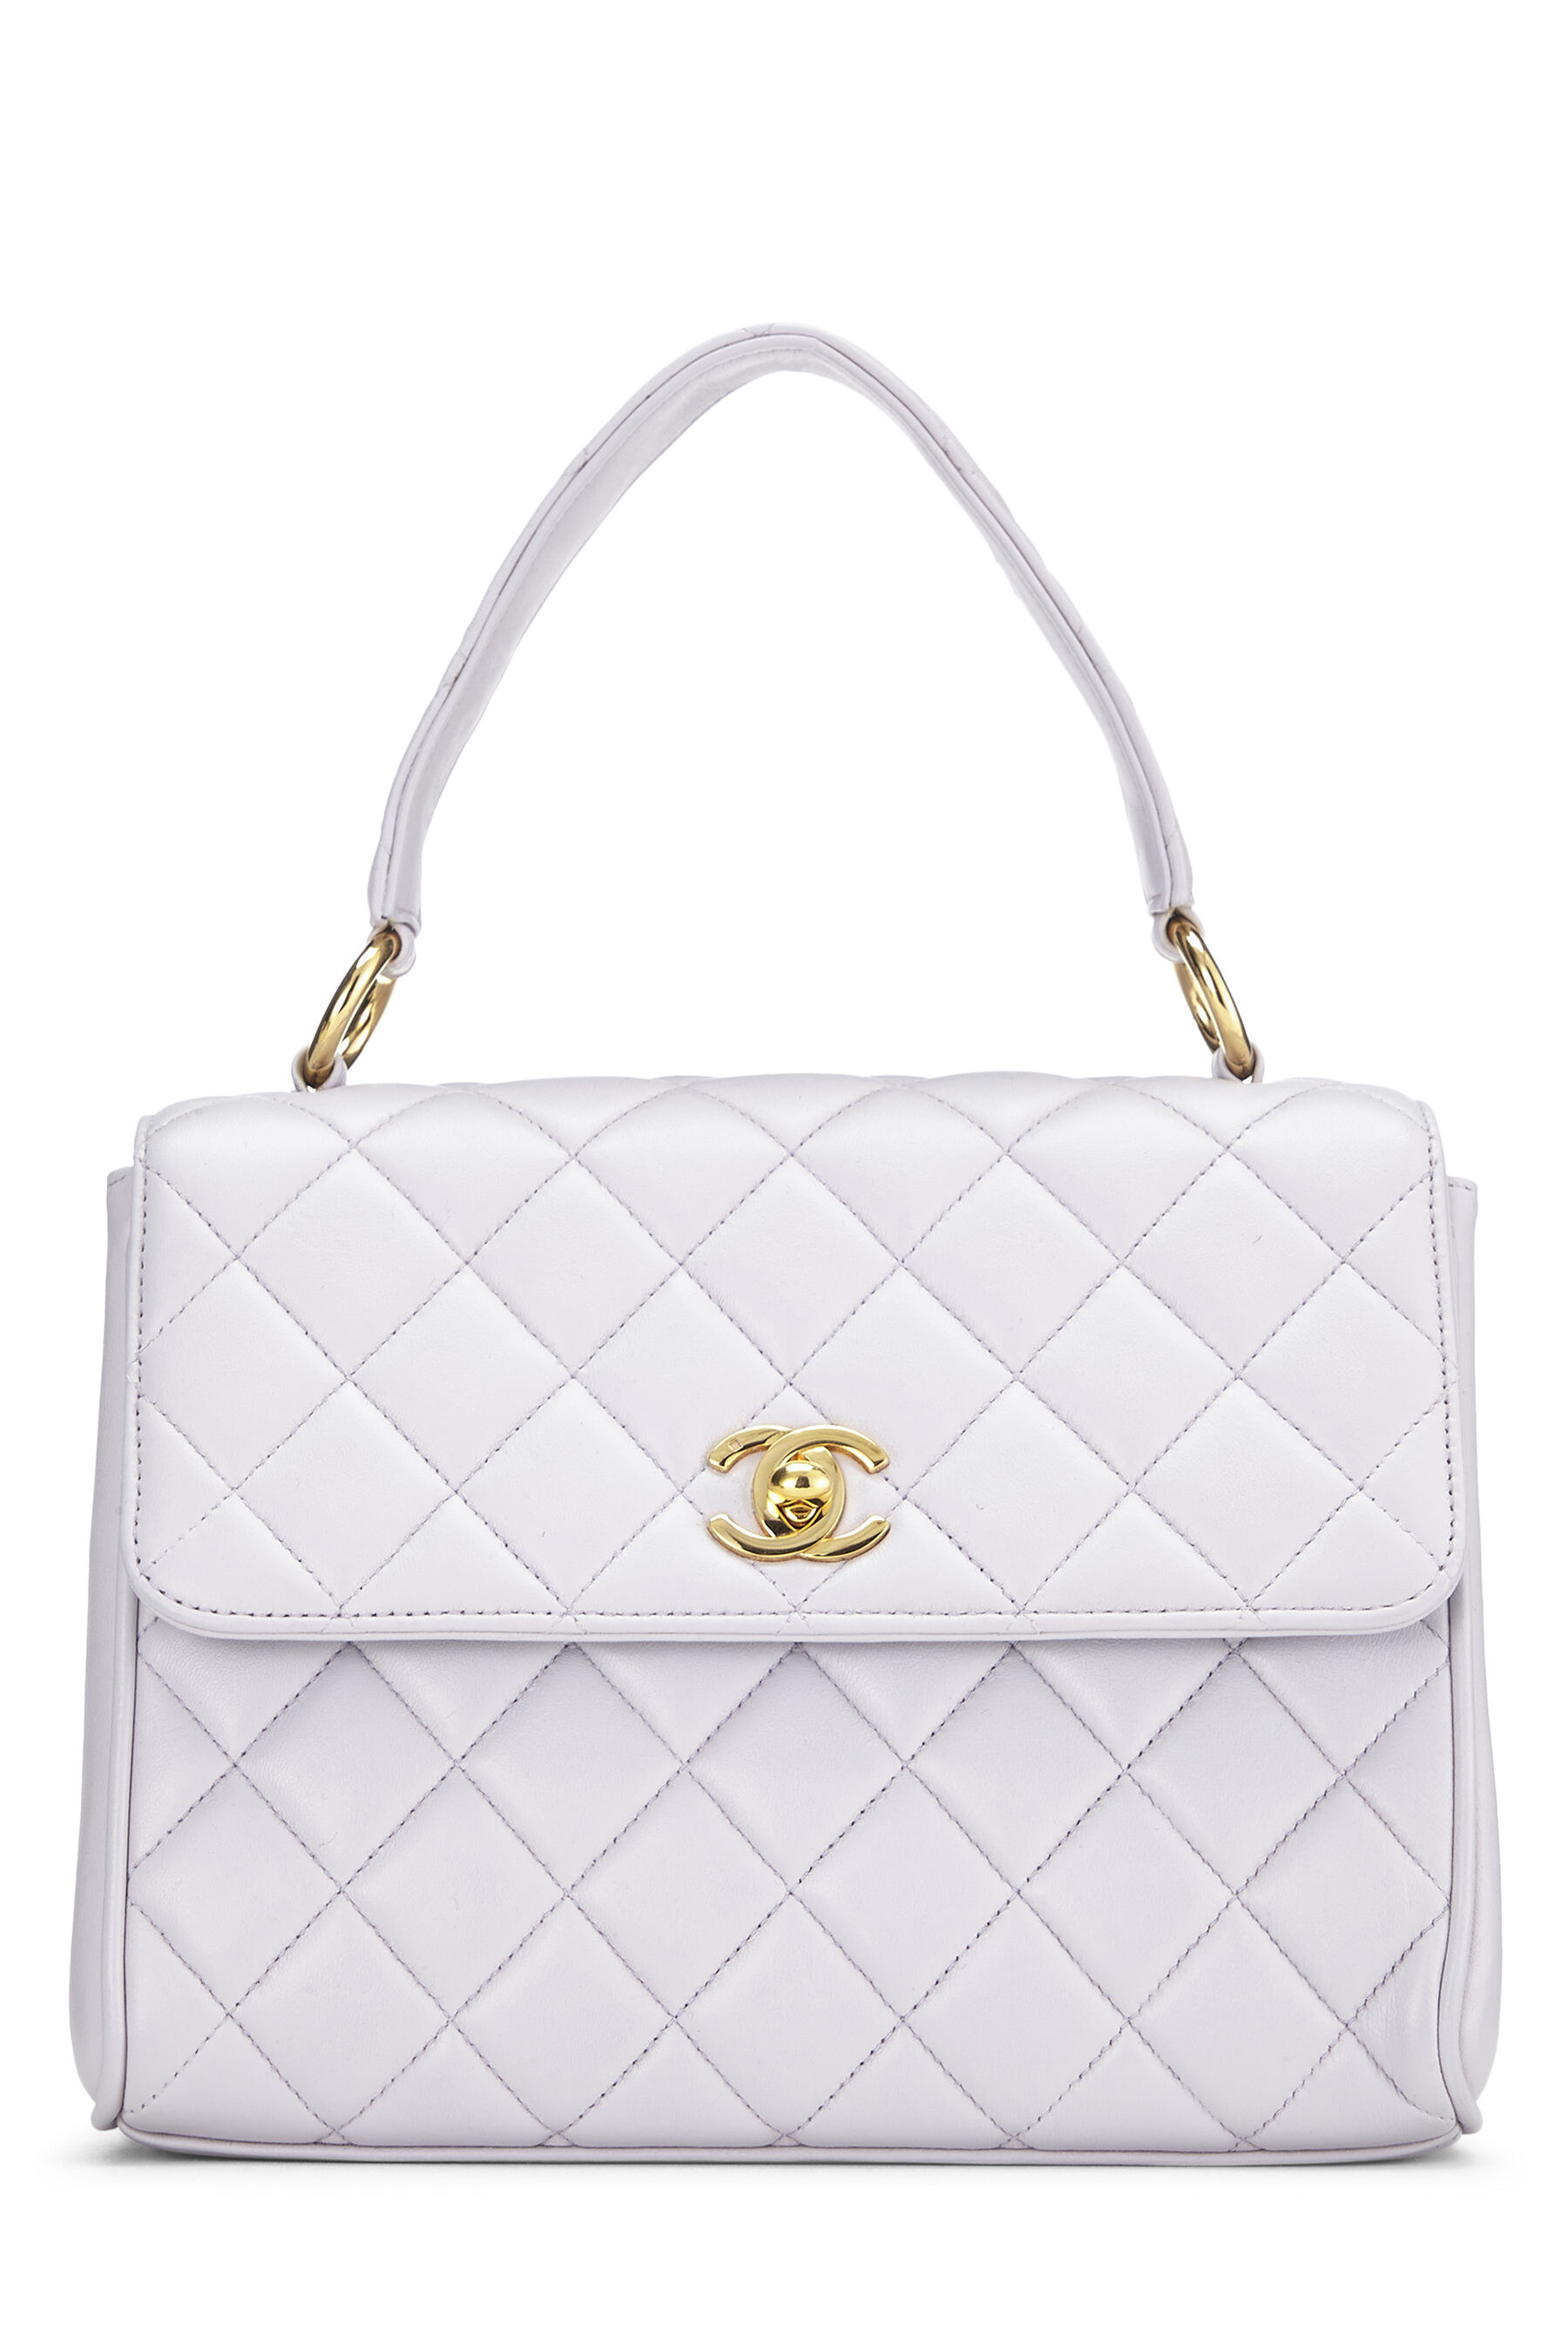 Chanel - Purple Lambskin Top Handle Bag Small